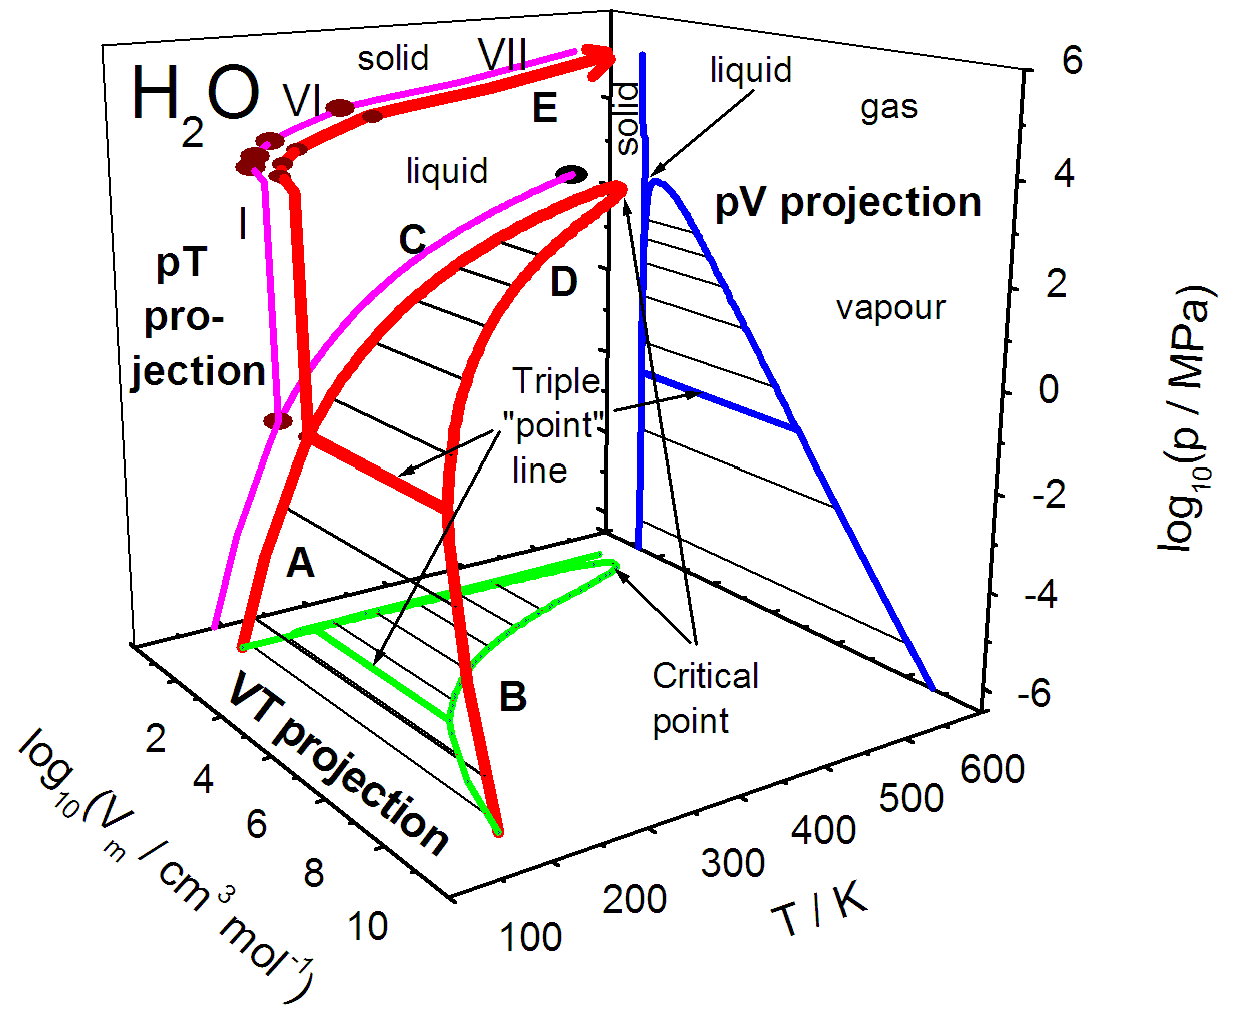 figure by L. Glasser (2004) J.Chem.Educ. 81:414